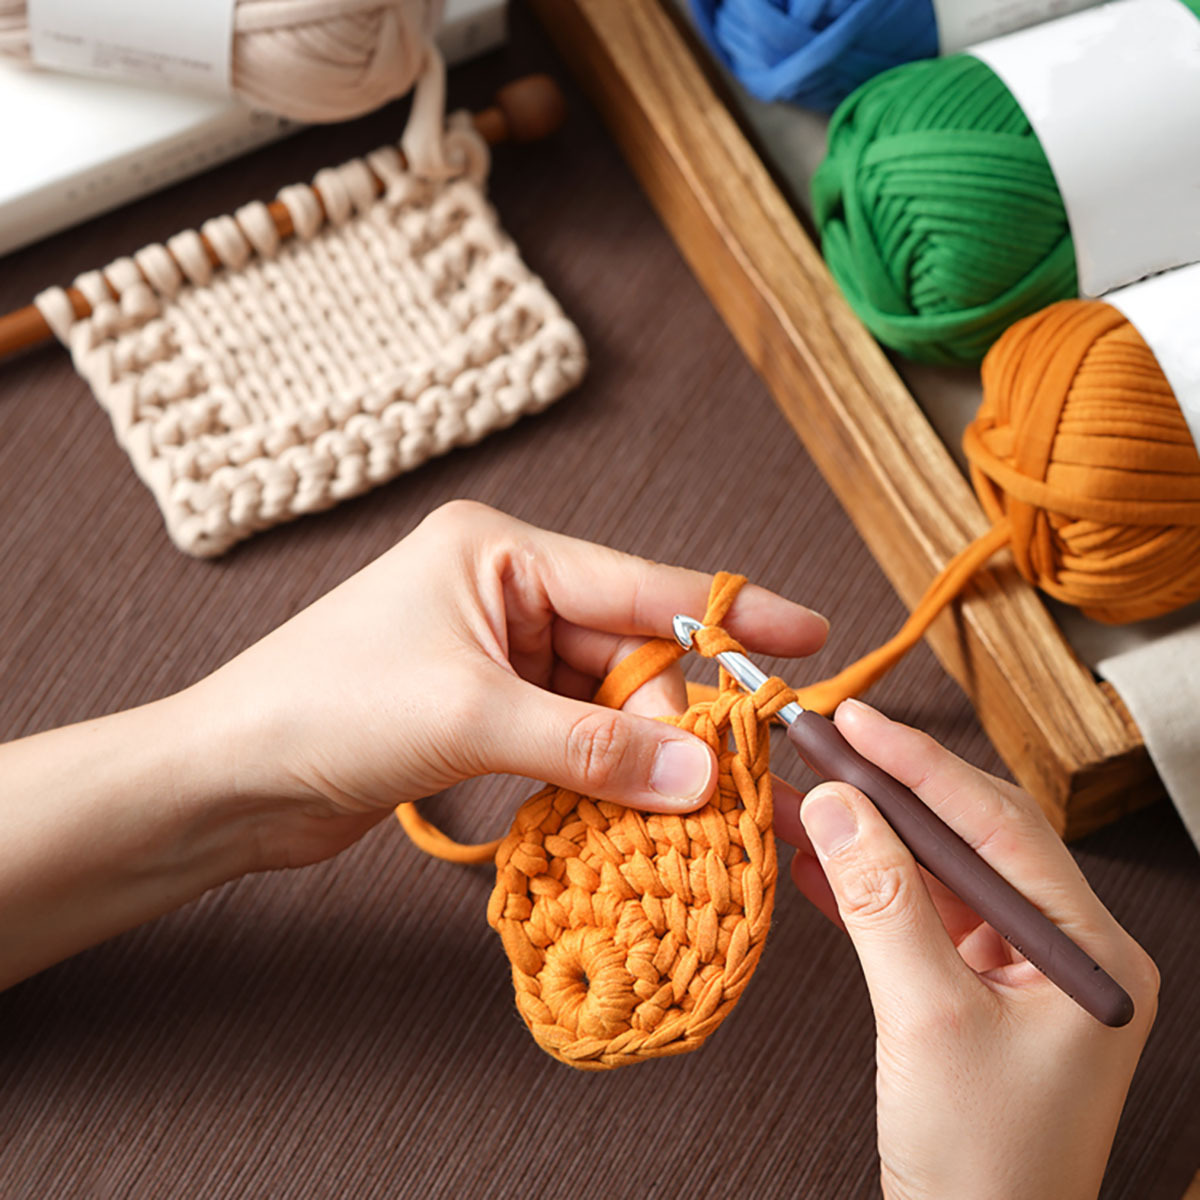 Hilados de algodón Crochet Knitting, Hilados de algodón gruesos Crochet